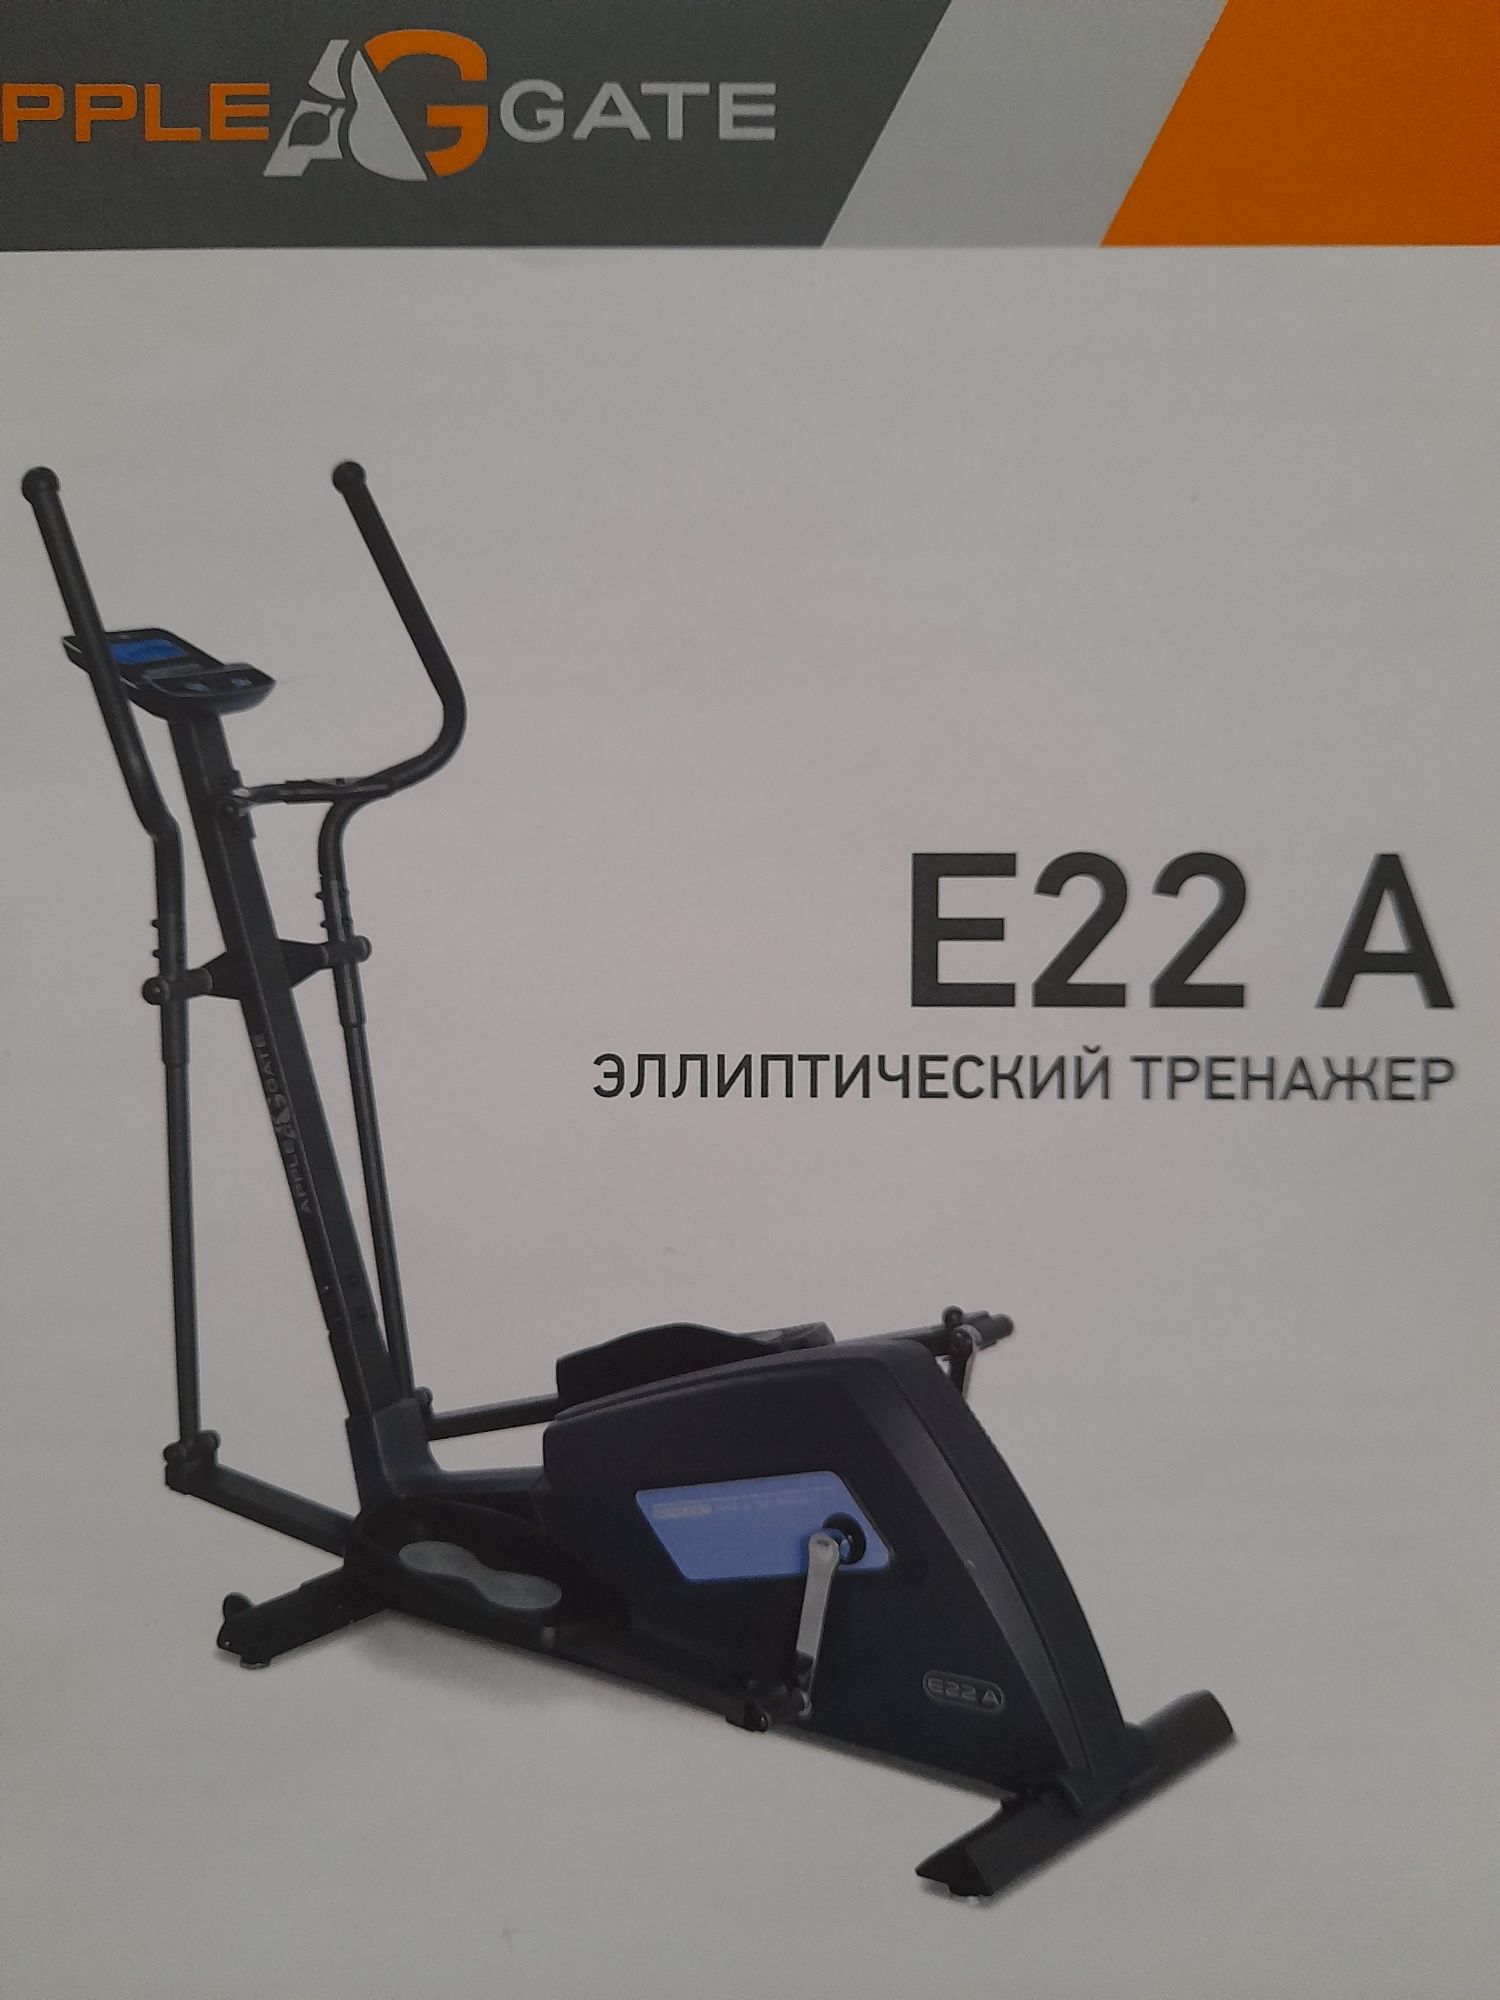 Продам тренажёр зллиптический Е22А